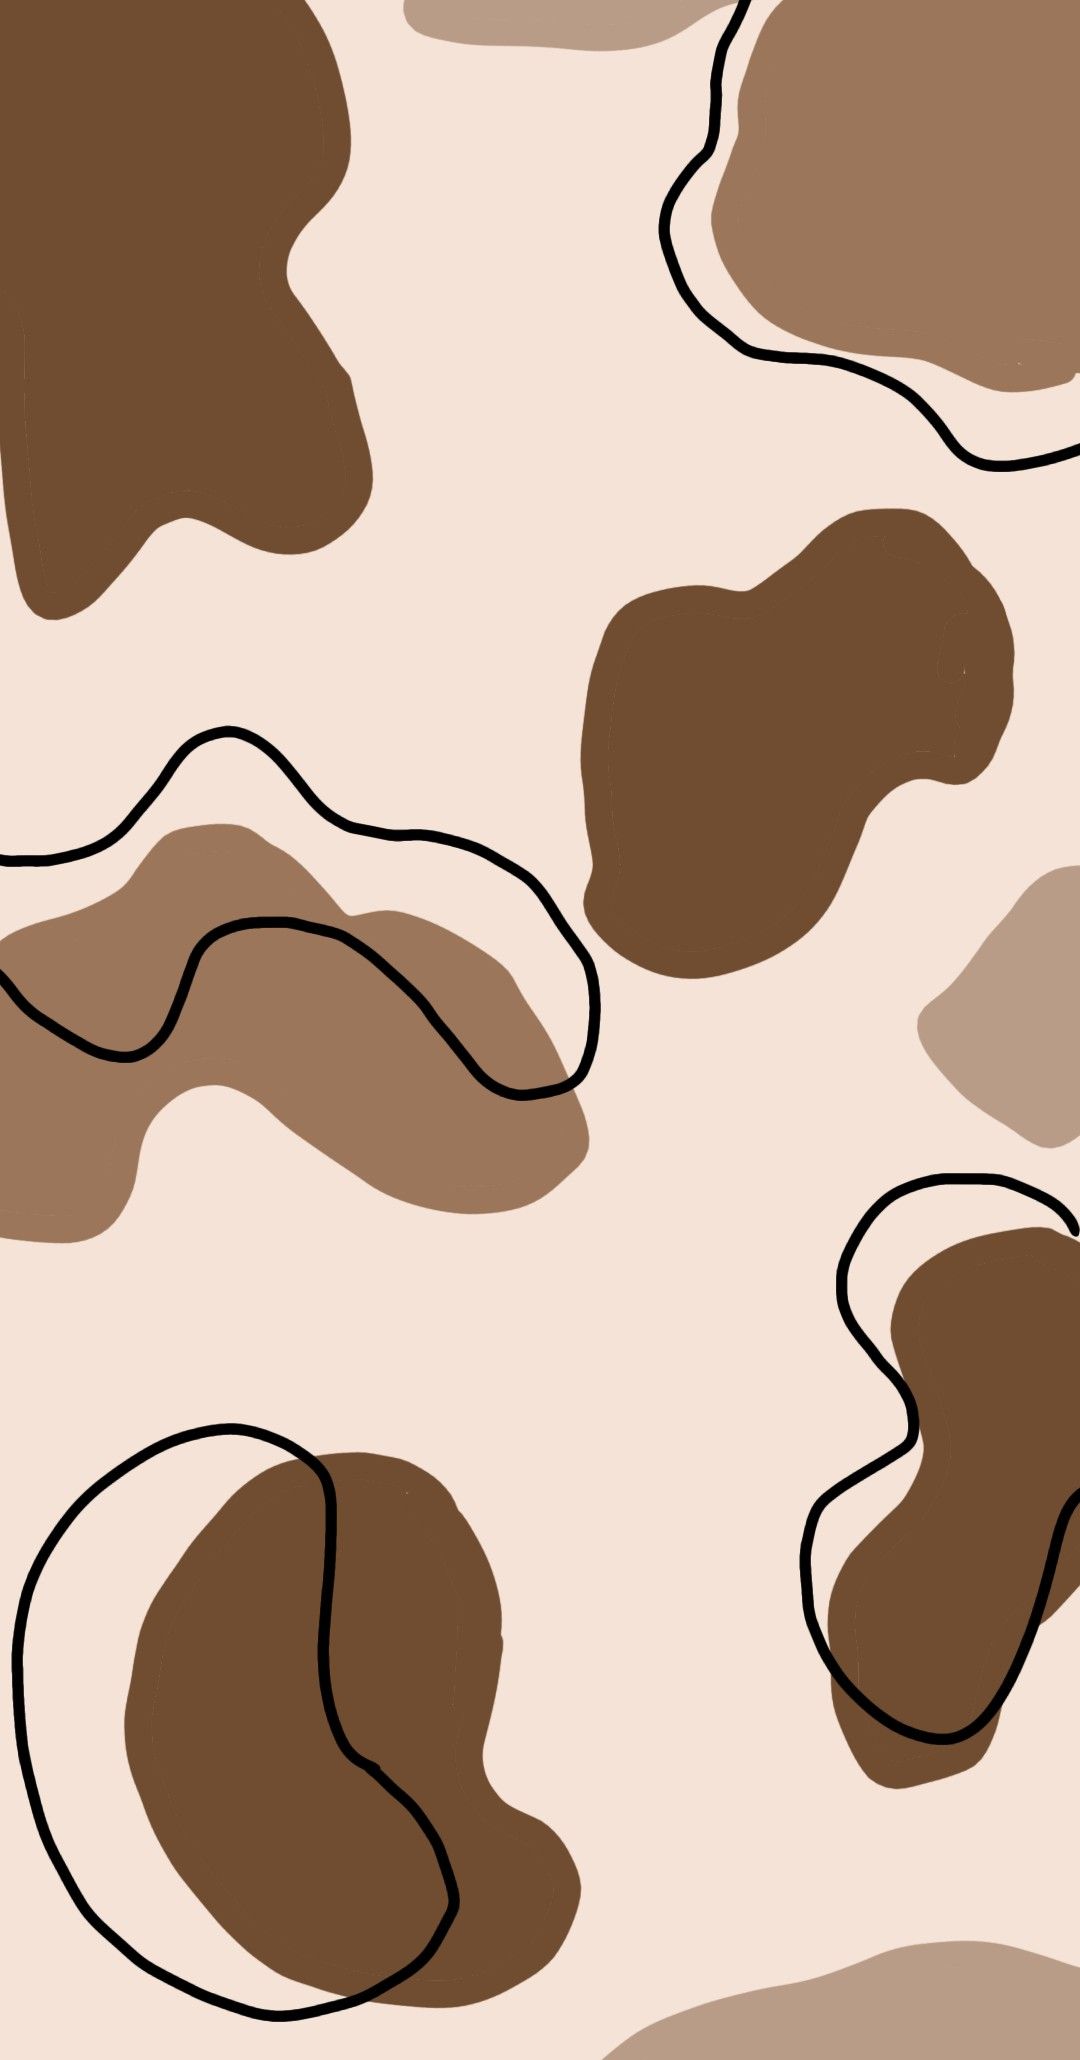 Brown Cow Print Peel and Stick Wallpaper Sample - 19′′x19′′, PVC-Free